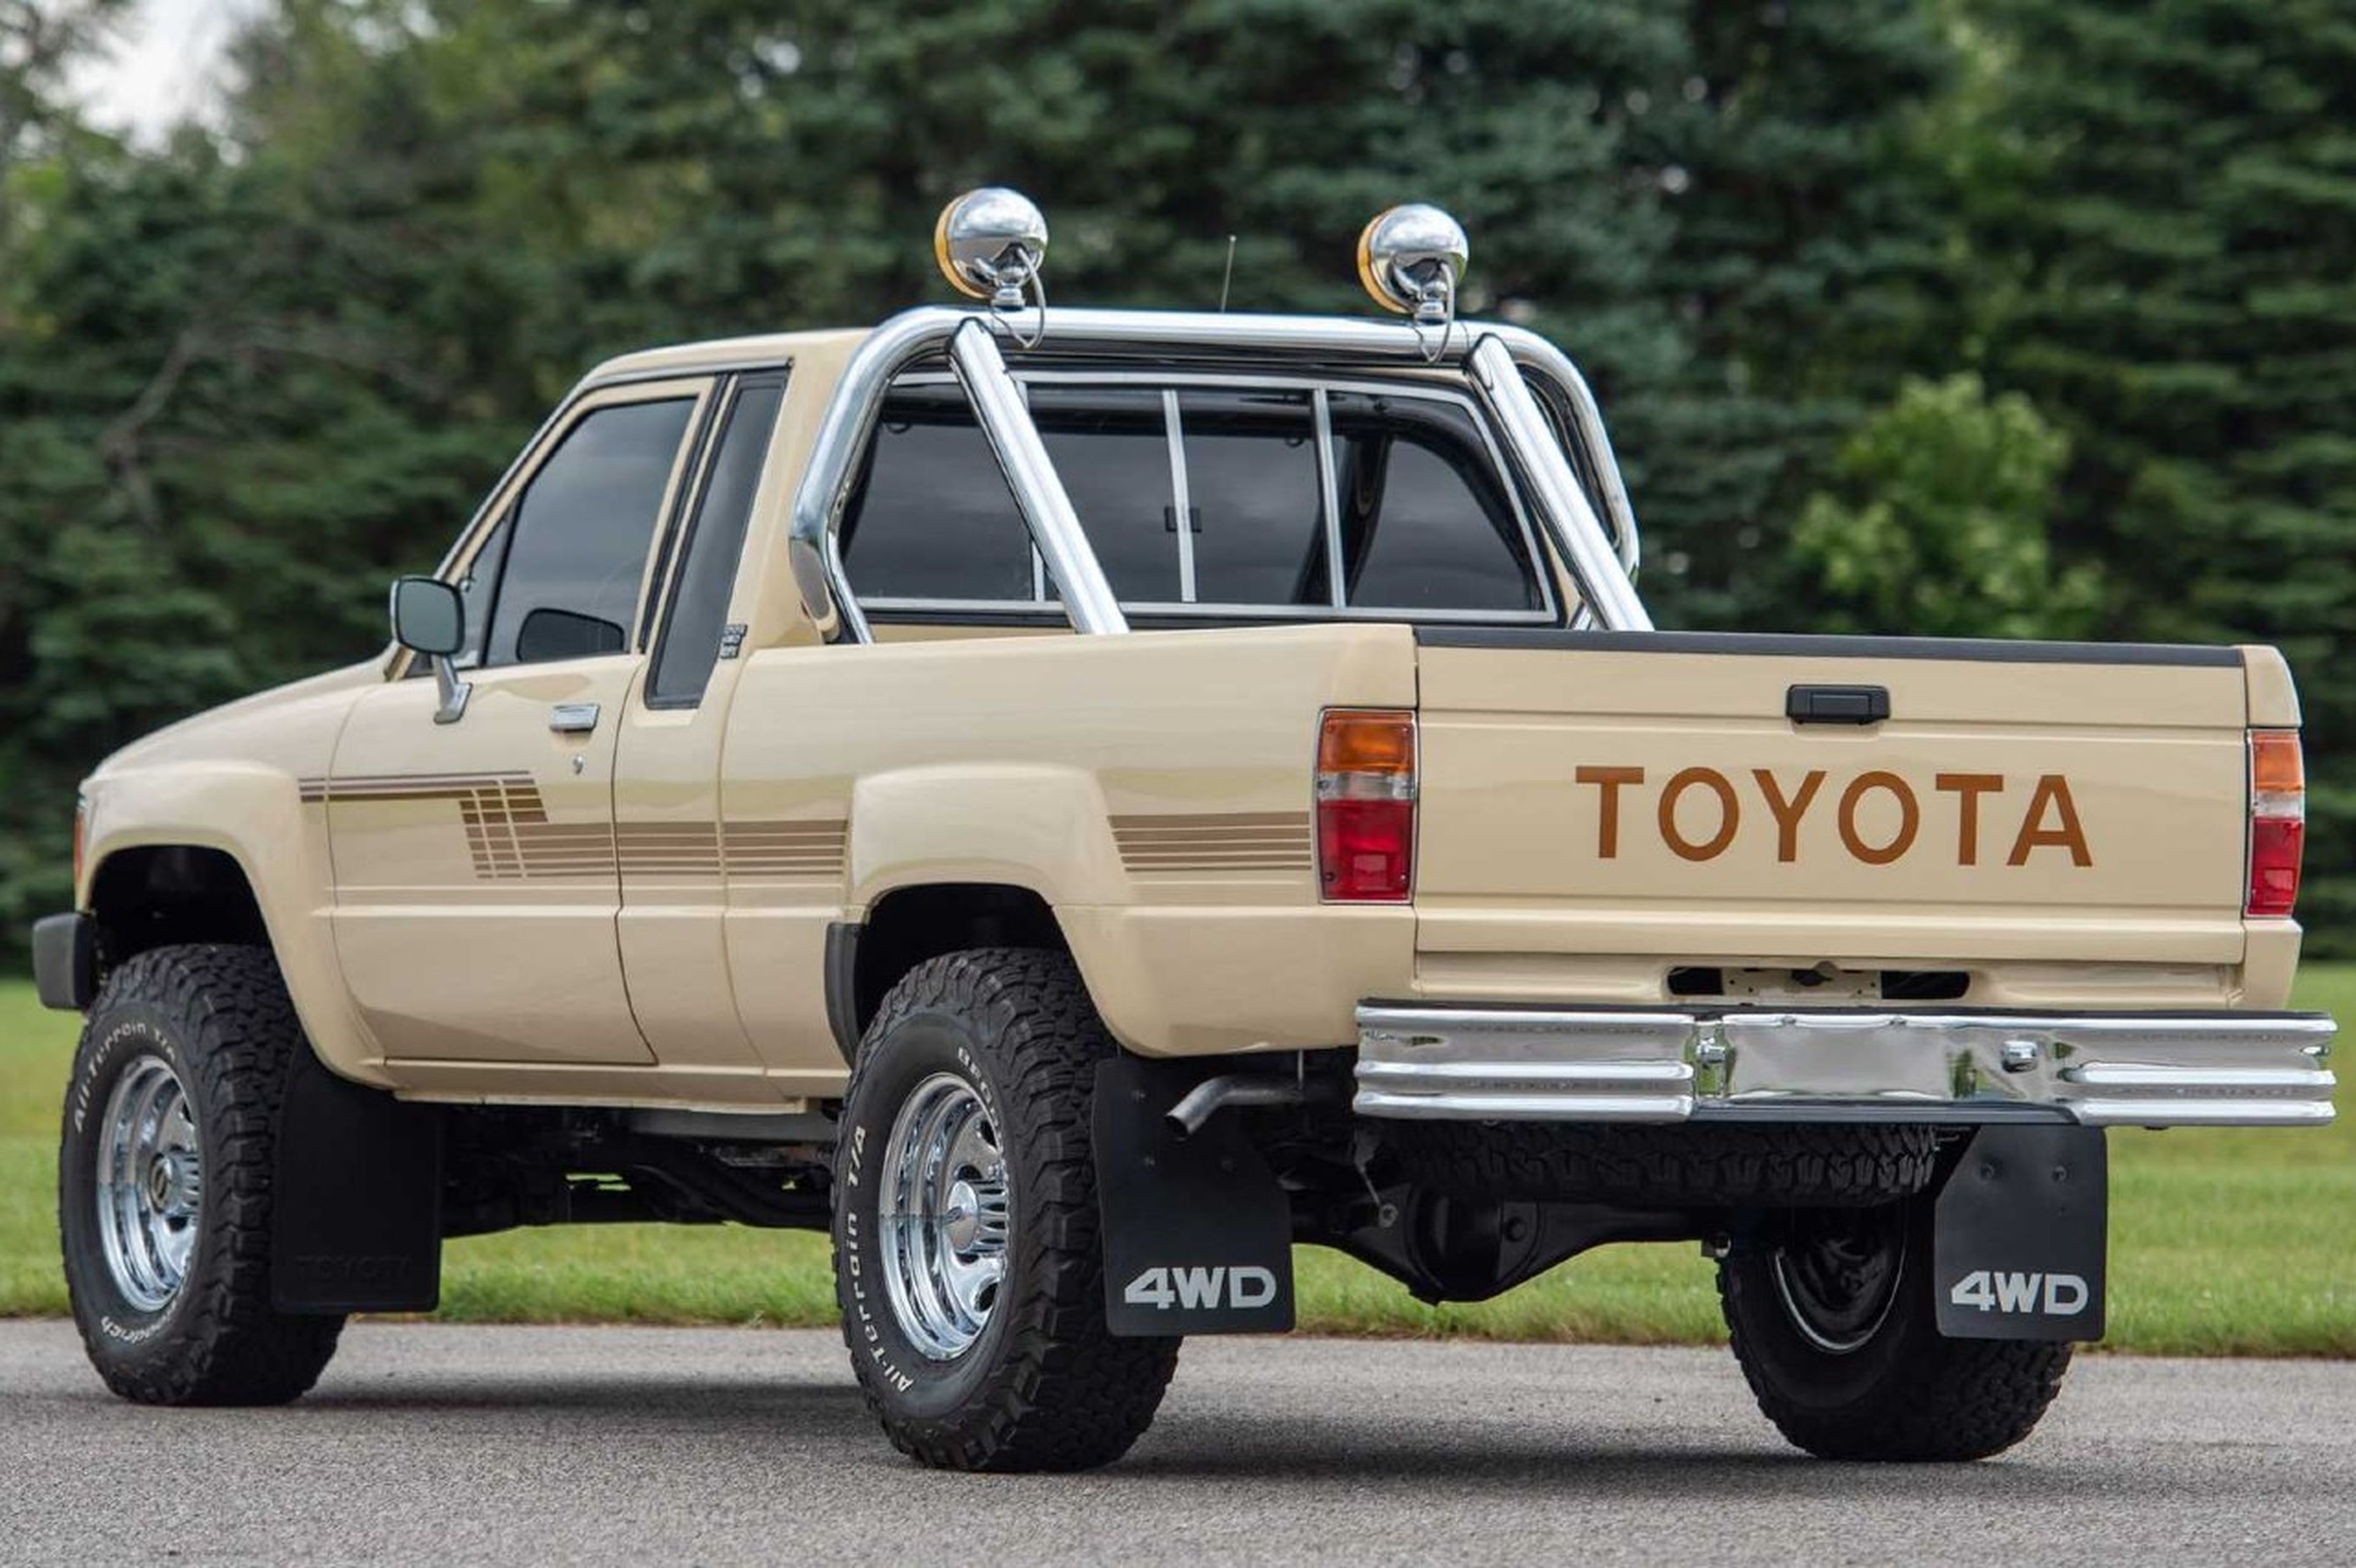 Sale a subasta un Toyota Xtracab 4x4 de 1986